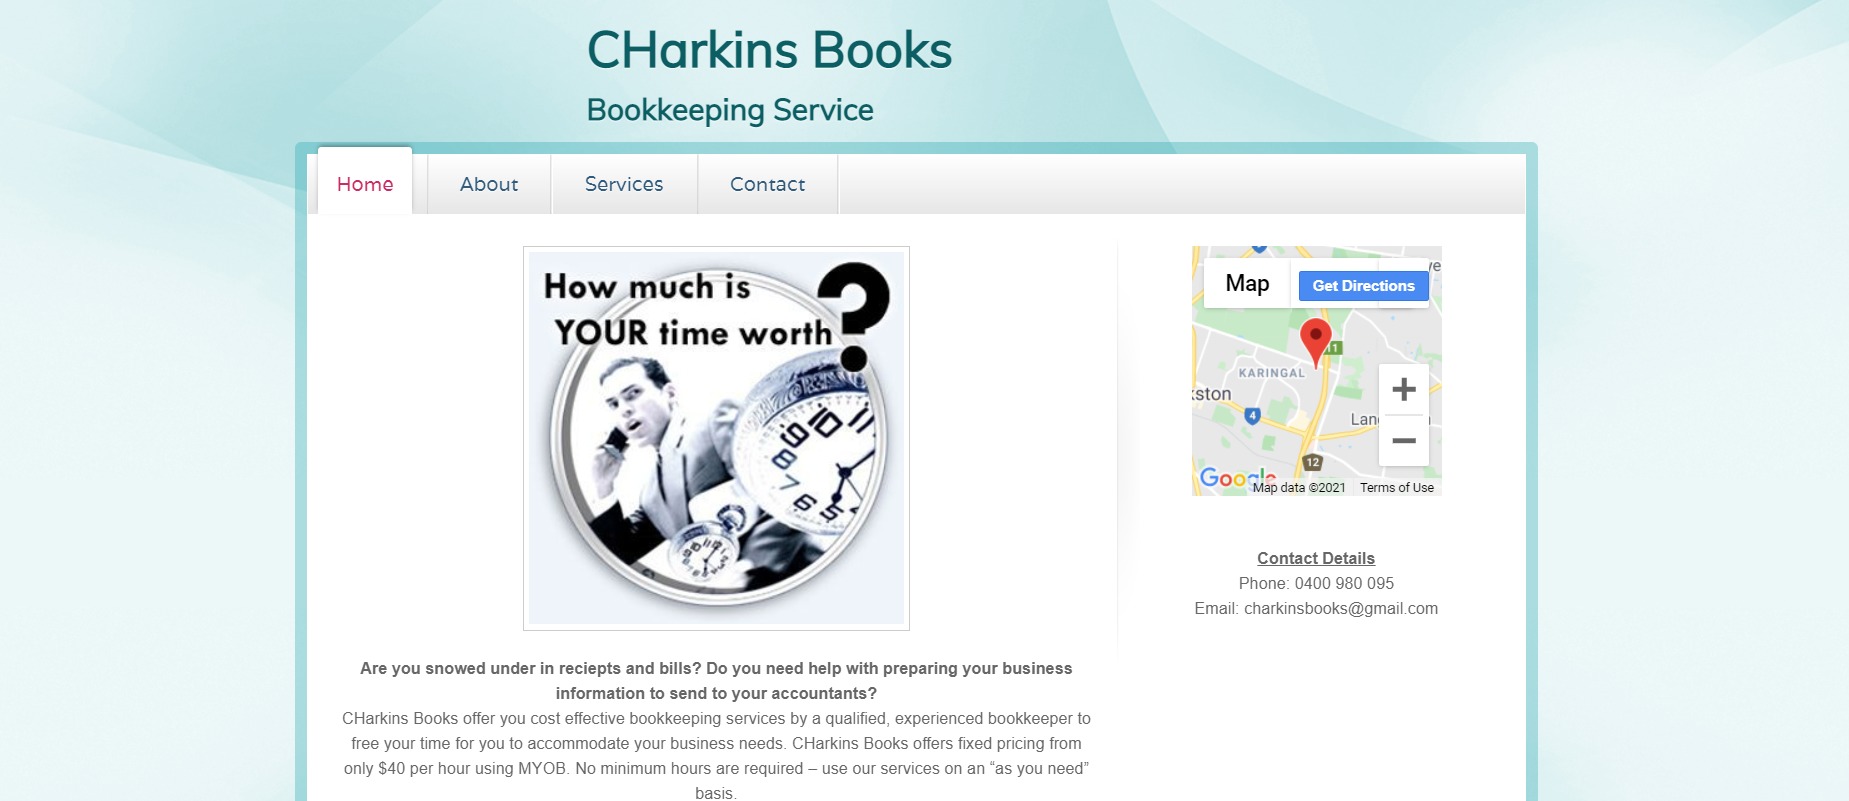 Charkins Books